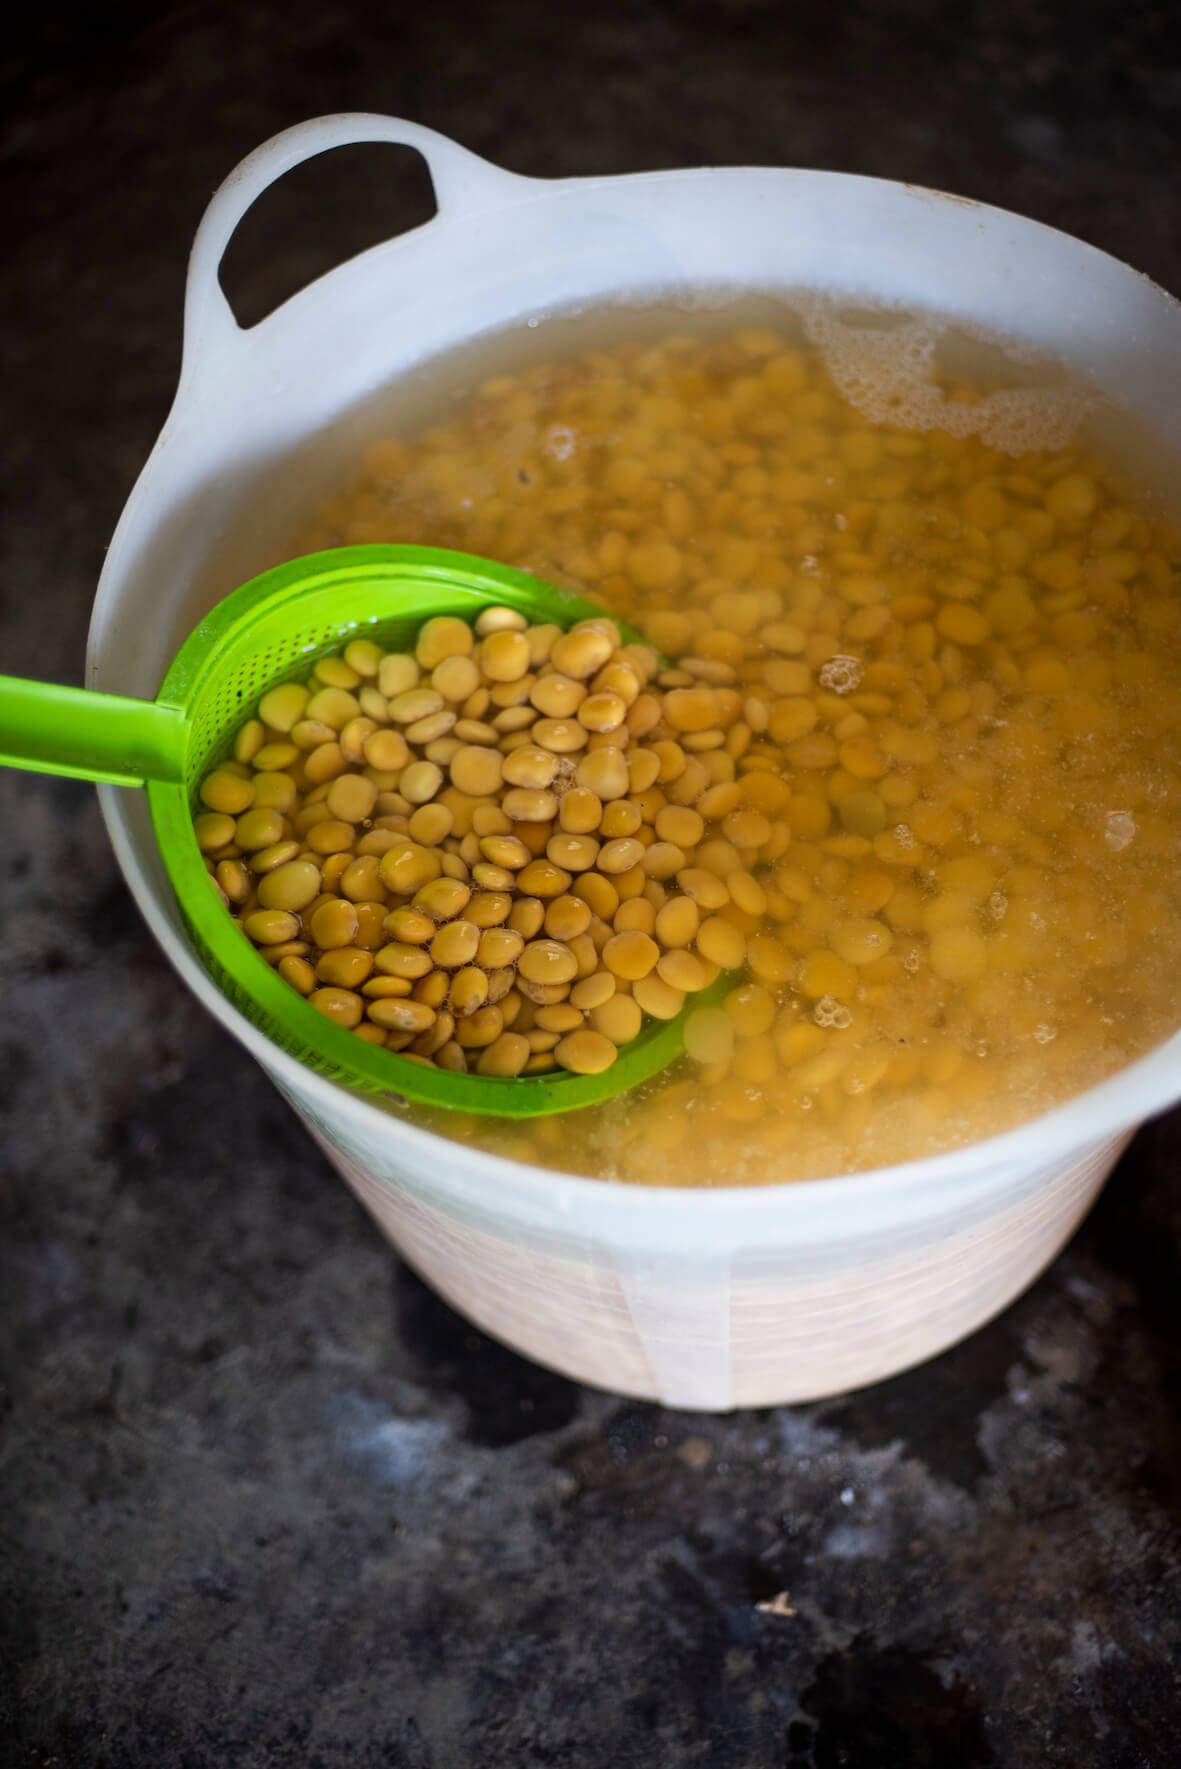 reigado portugal lupini beans soaking